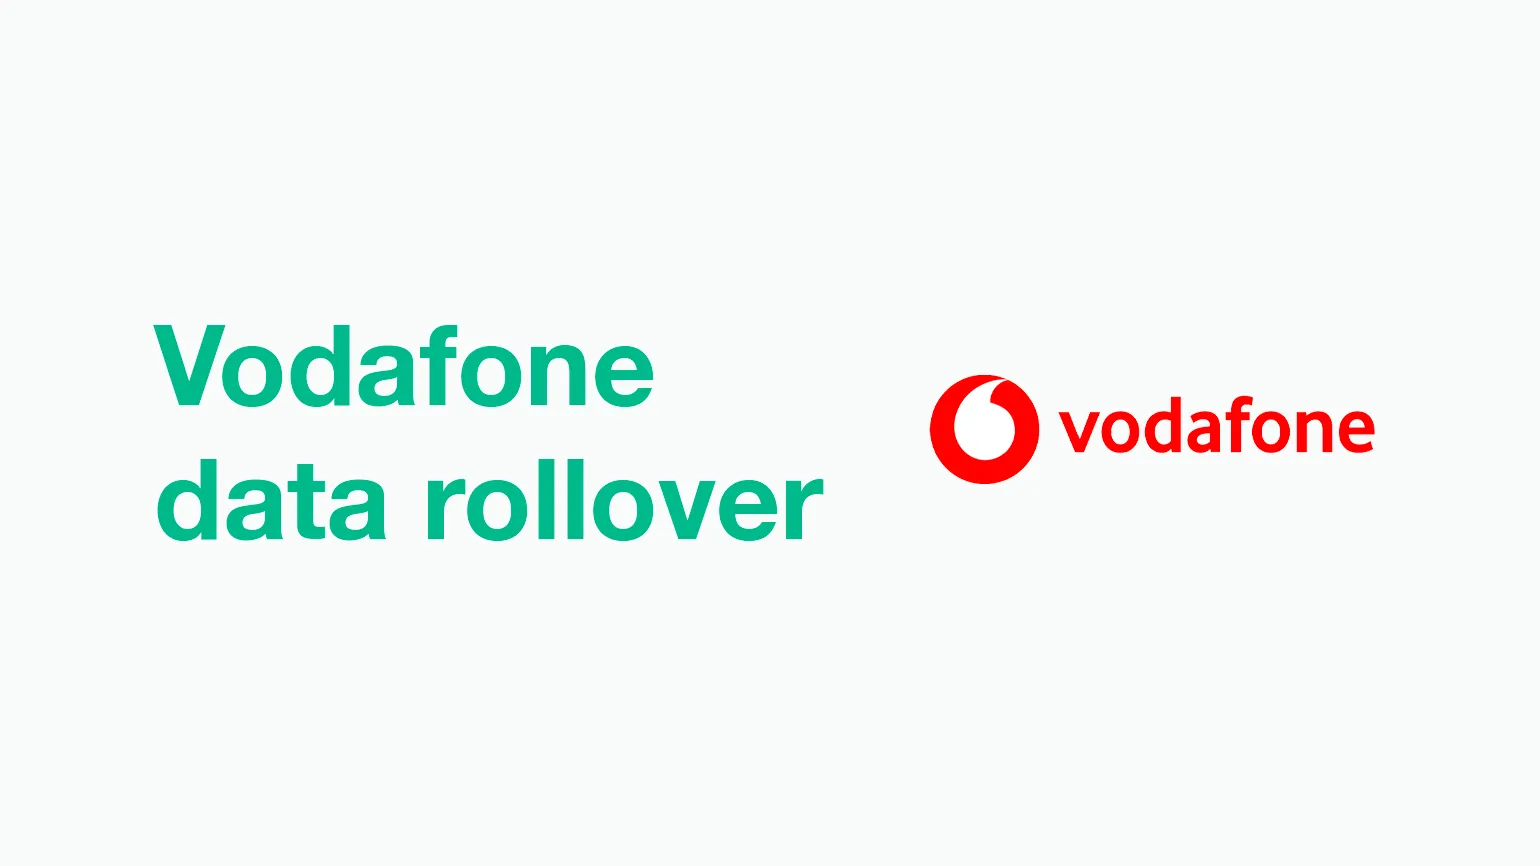 Vodafone data rollover